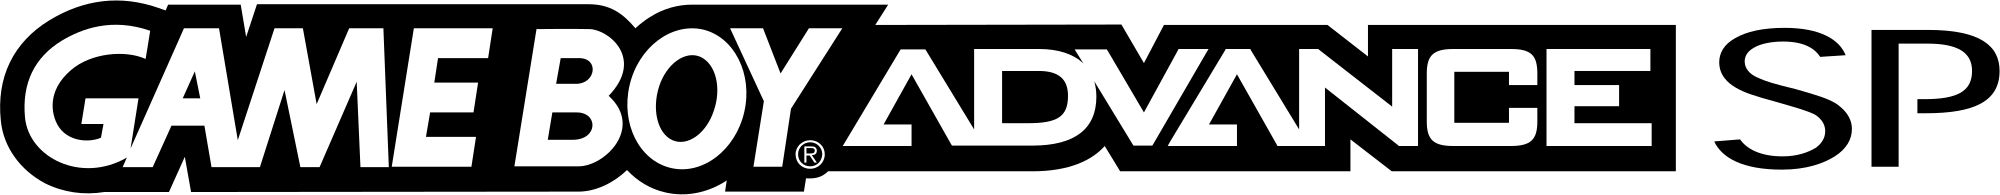 Gameboy Advance SP logo